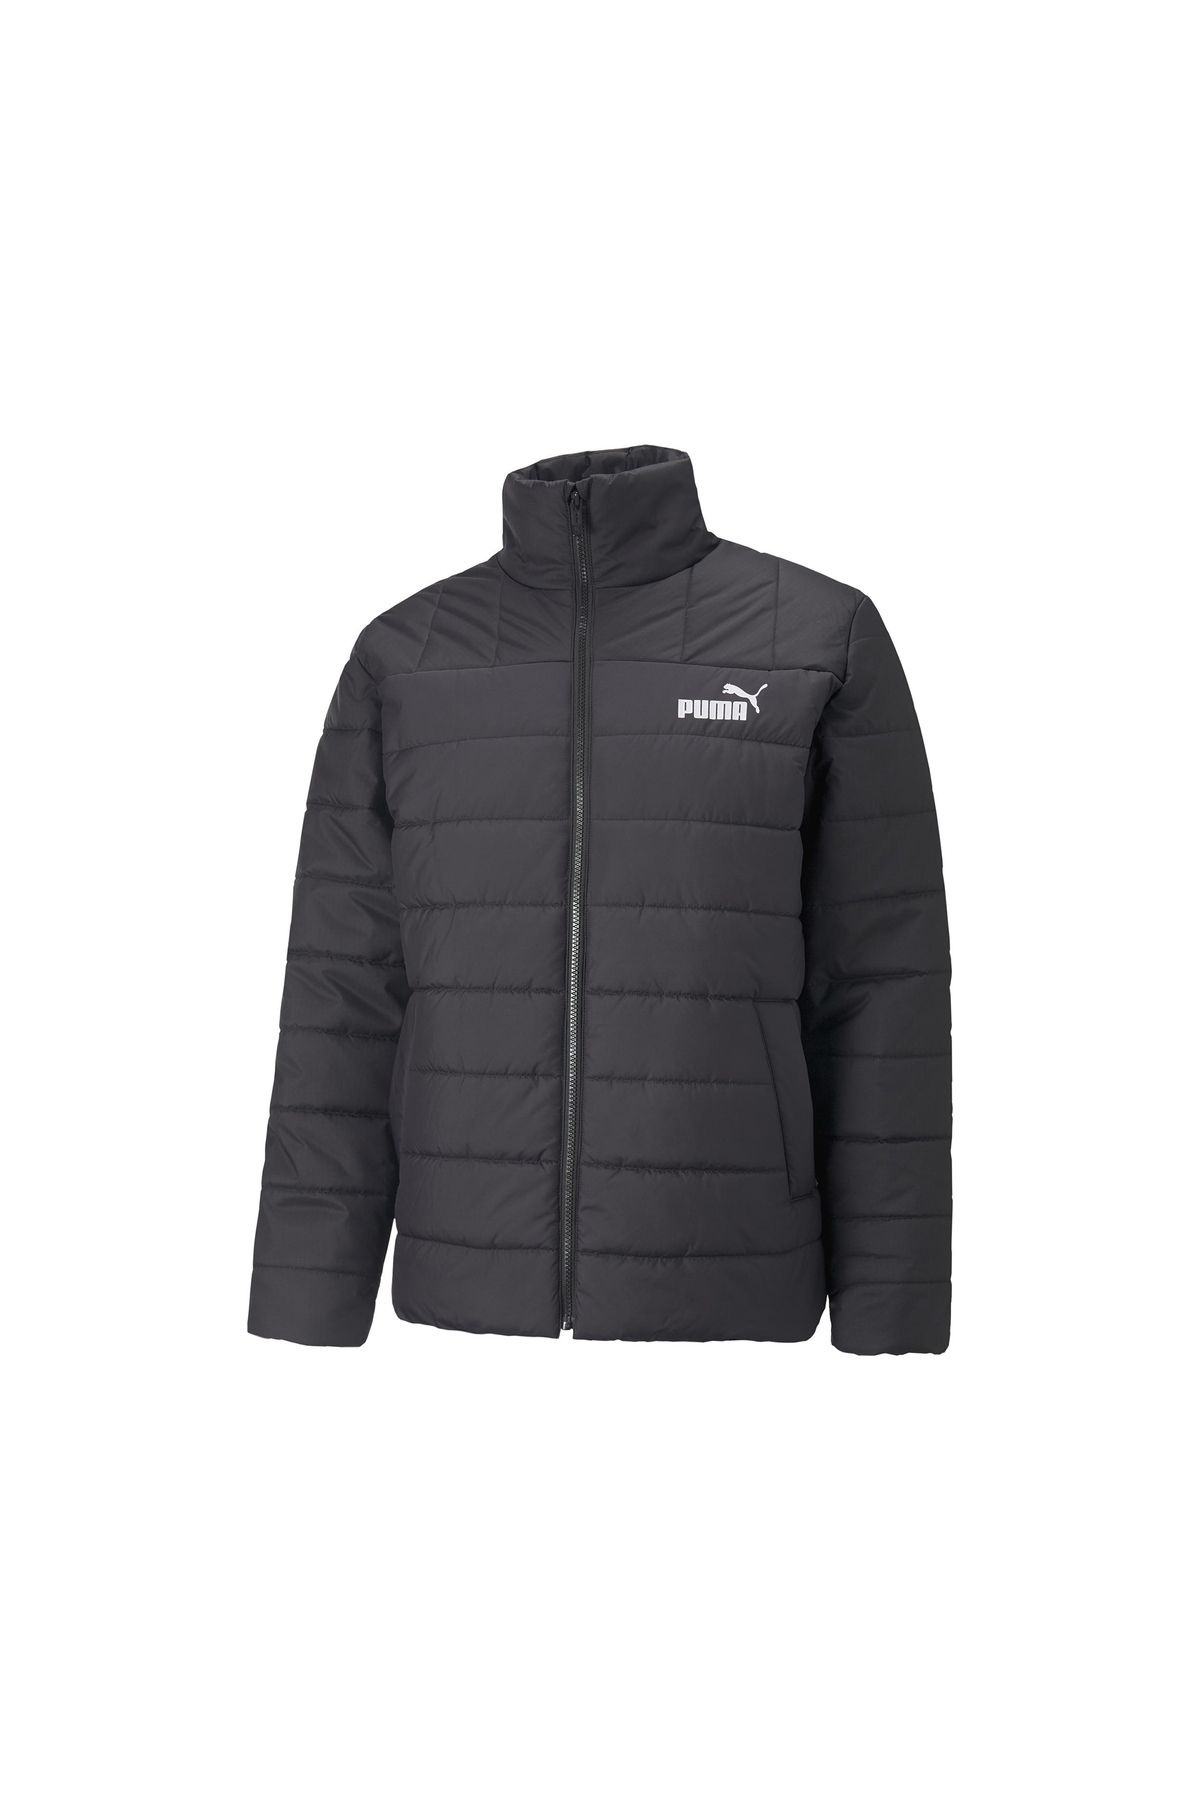 Puma Ess+ Padded Jacket Men's Casual Coat 84934901 Black - Trendyol